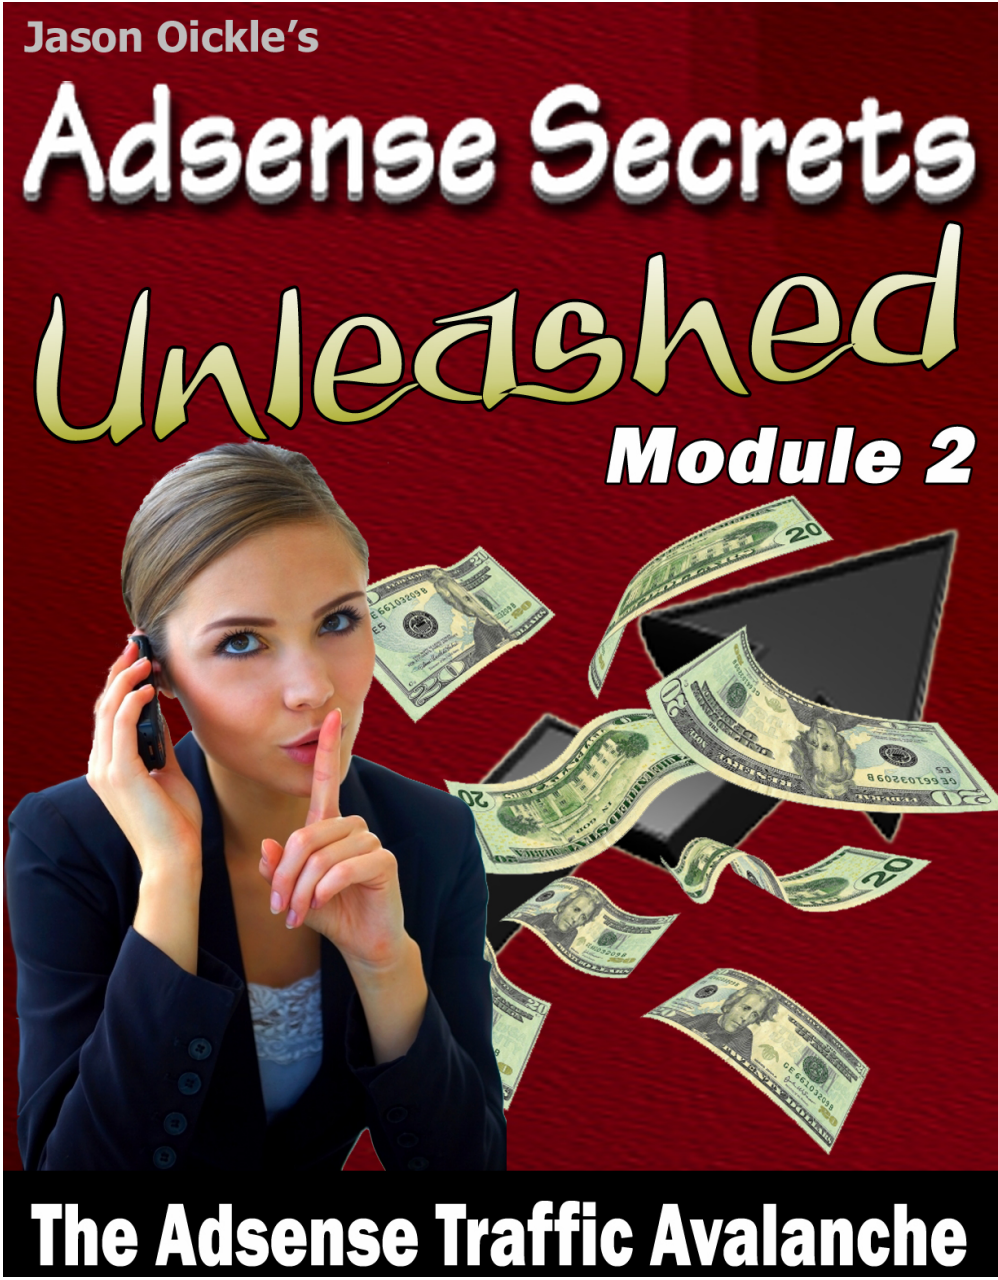 AdSense Secrets Unleashed Module 2